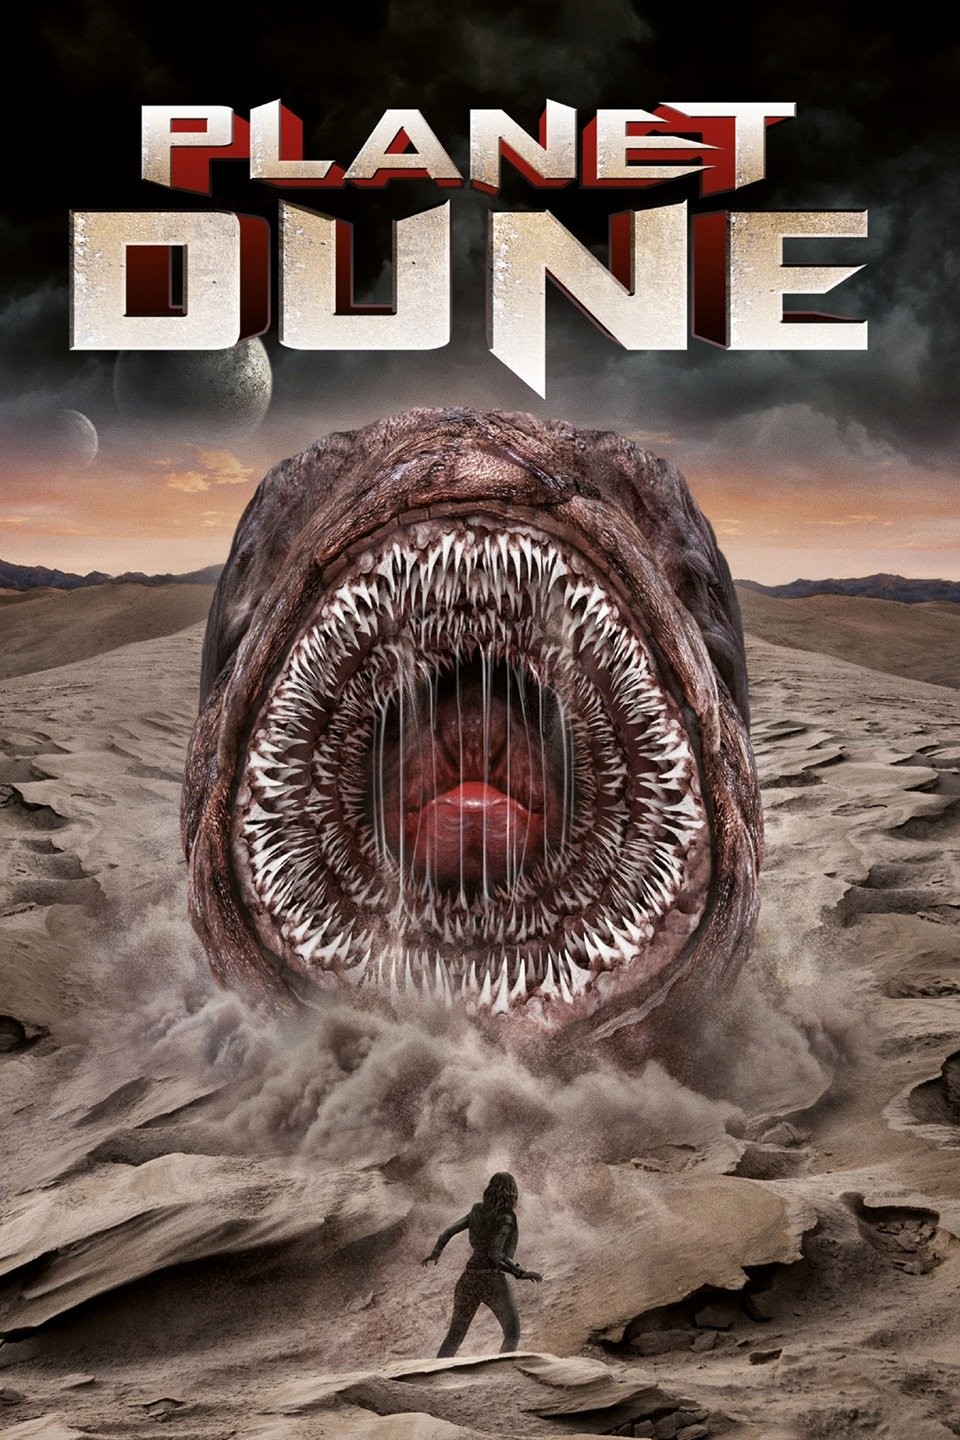 Dune  Rotten Tomatoes